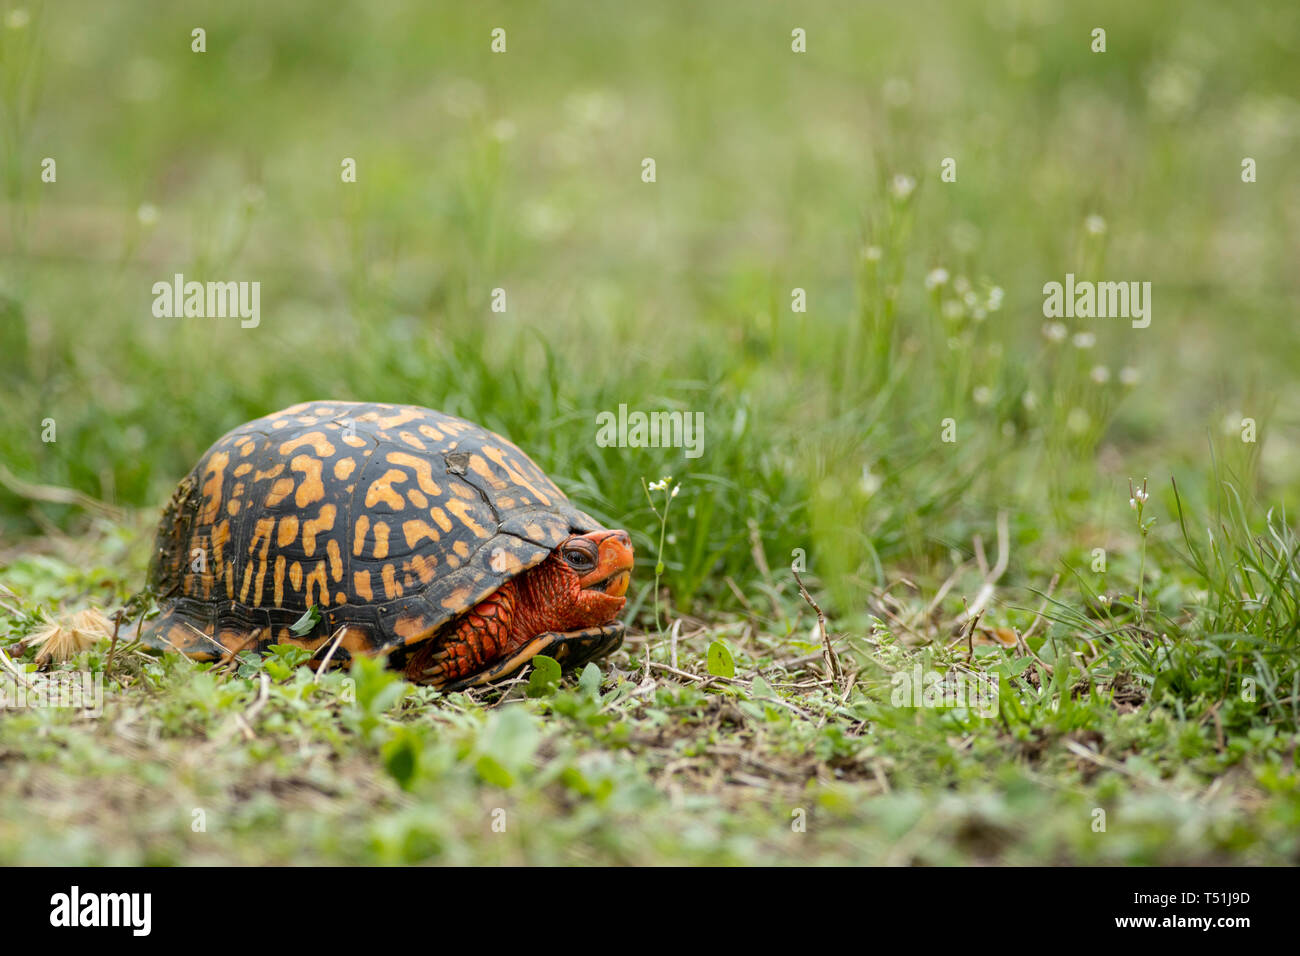 Orange eastern box turtle - Terrapene carolina Stock Photo